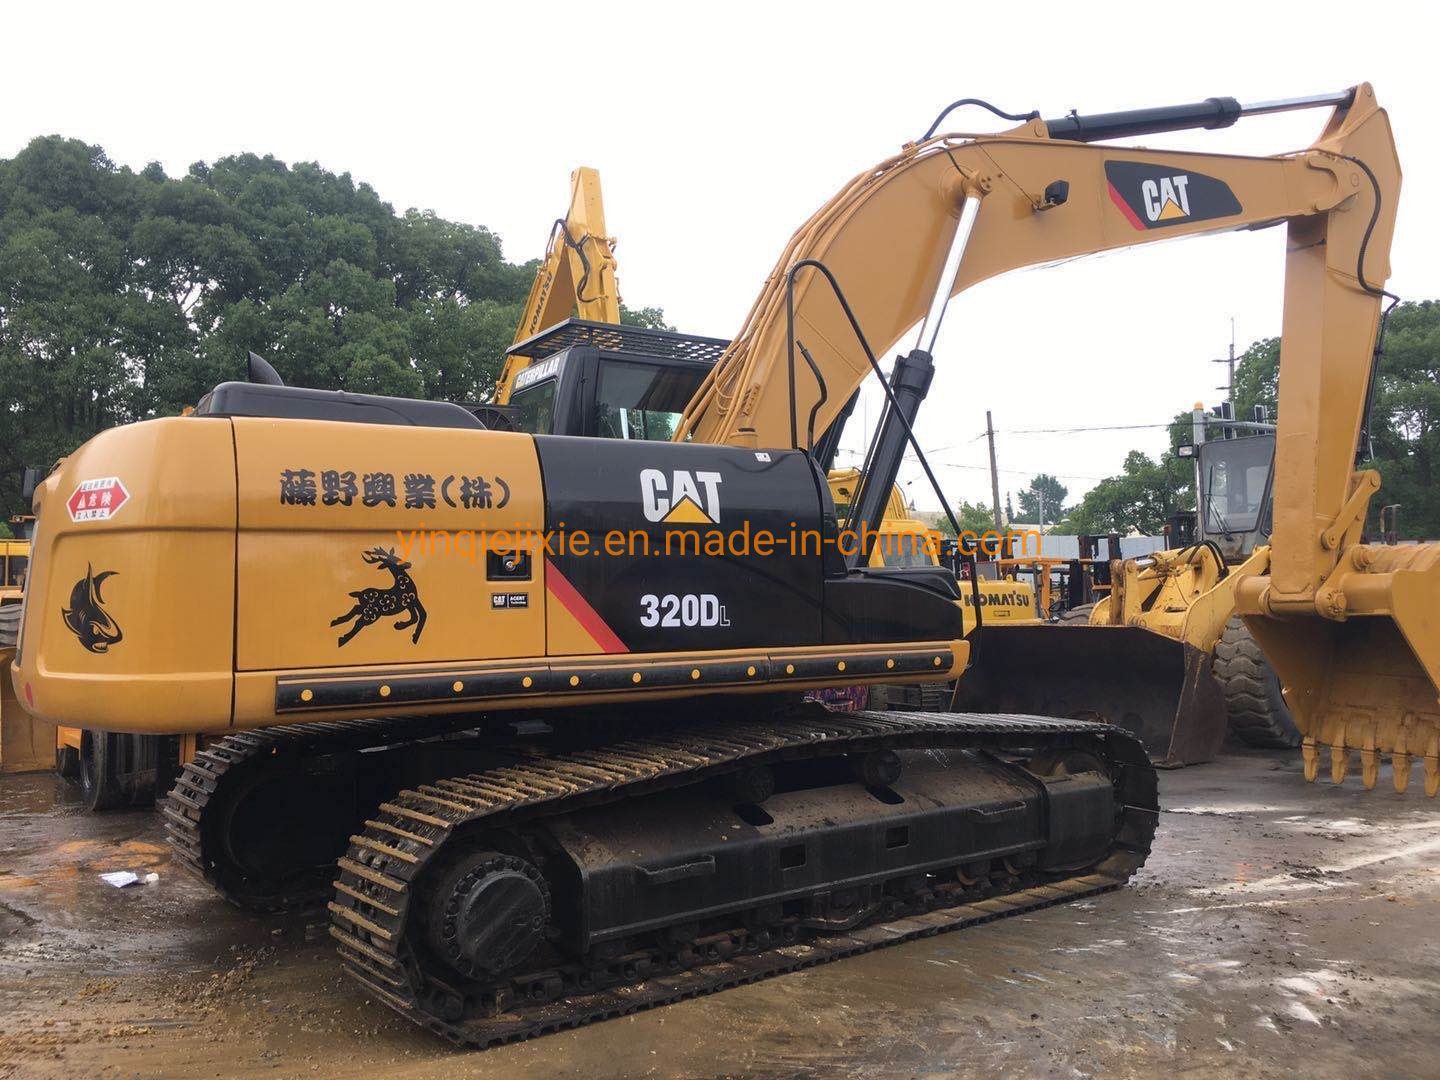 Cina 
                Escavatore Cat 320D Cat 320dl usato per escavatore Caterpillar 320d2
             fornitore